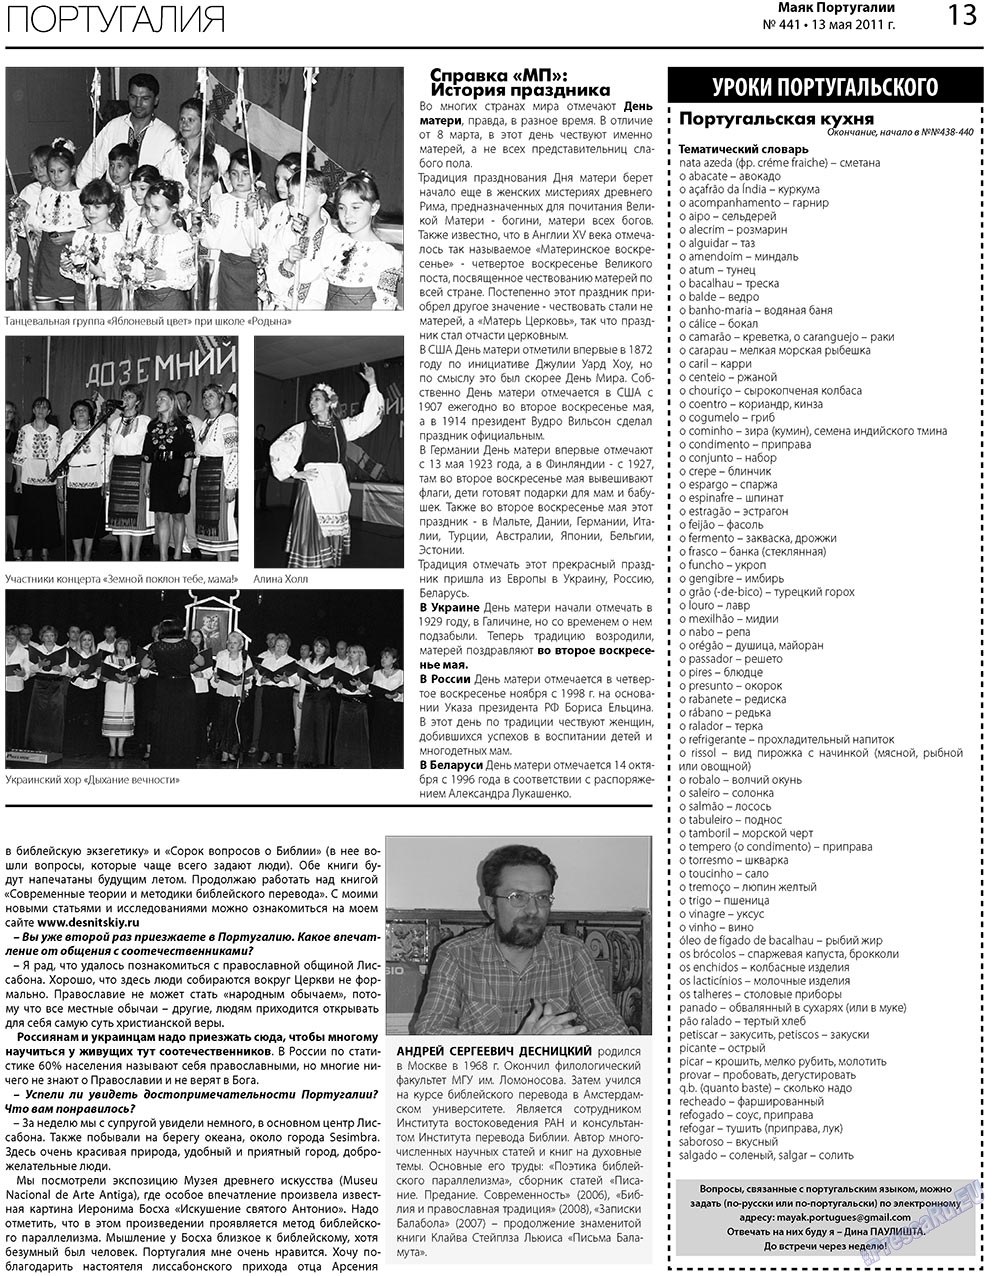 Маяк Португалии, газета. 2011 №441 стр.13